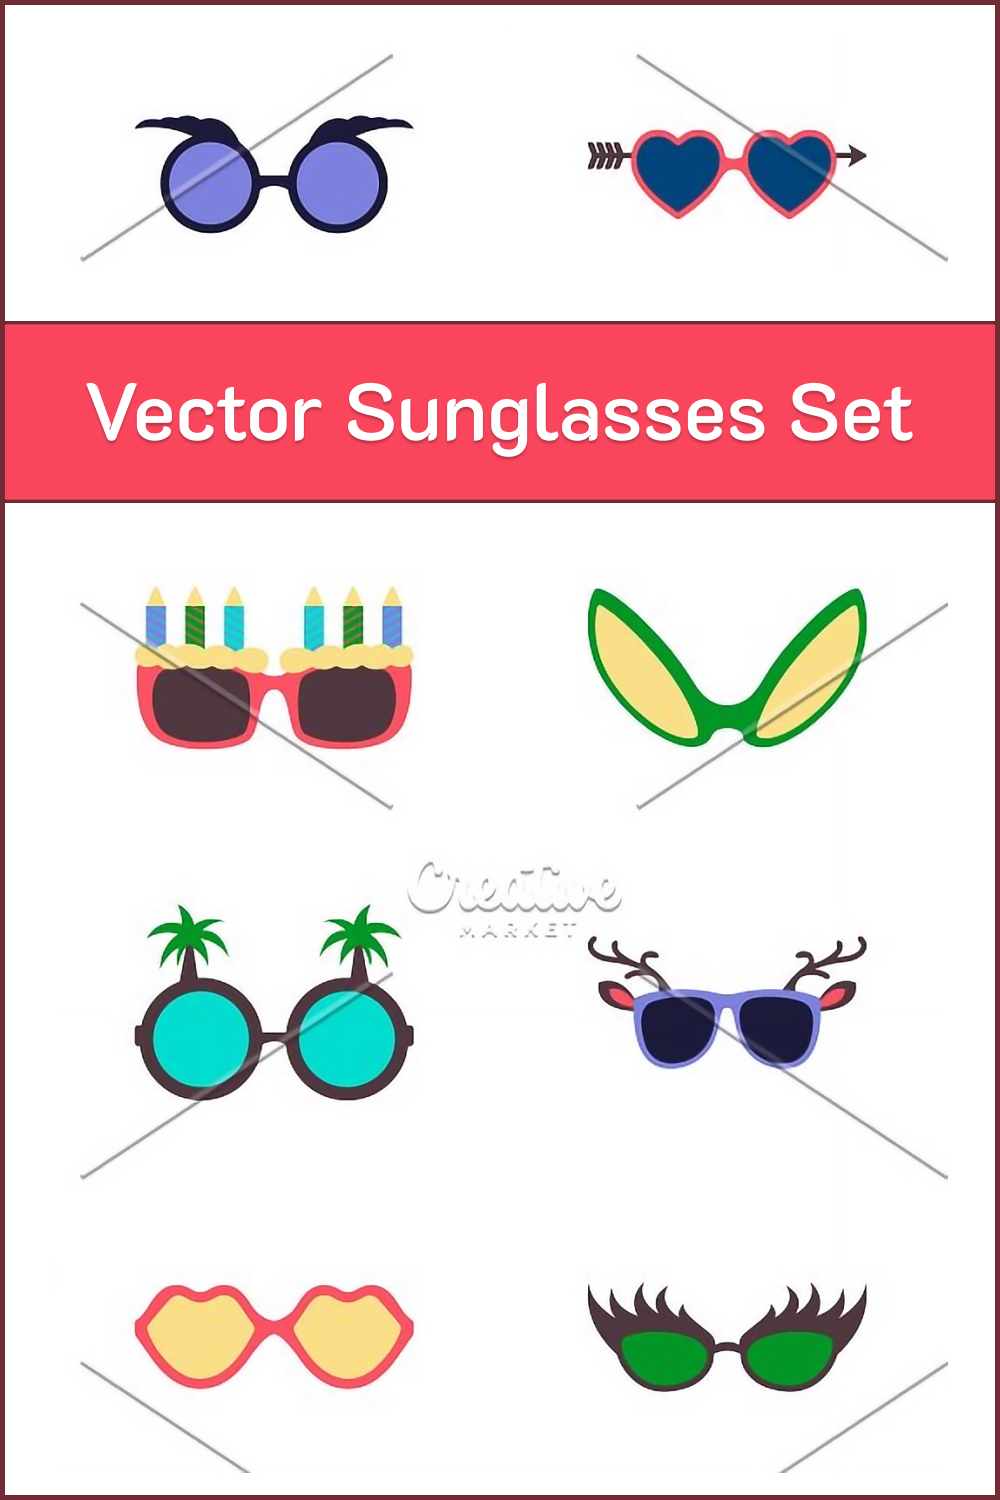 Illustrations vector sunglasses set of pinterest.